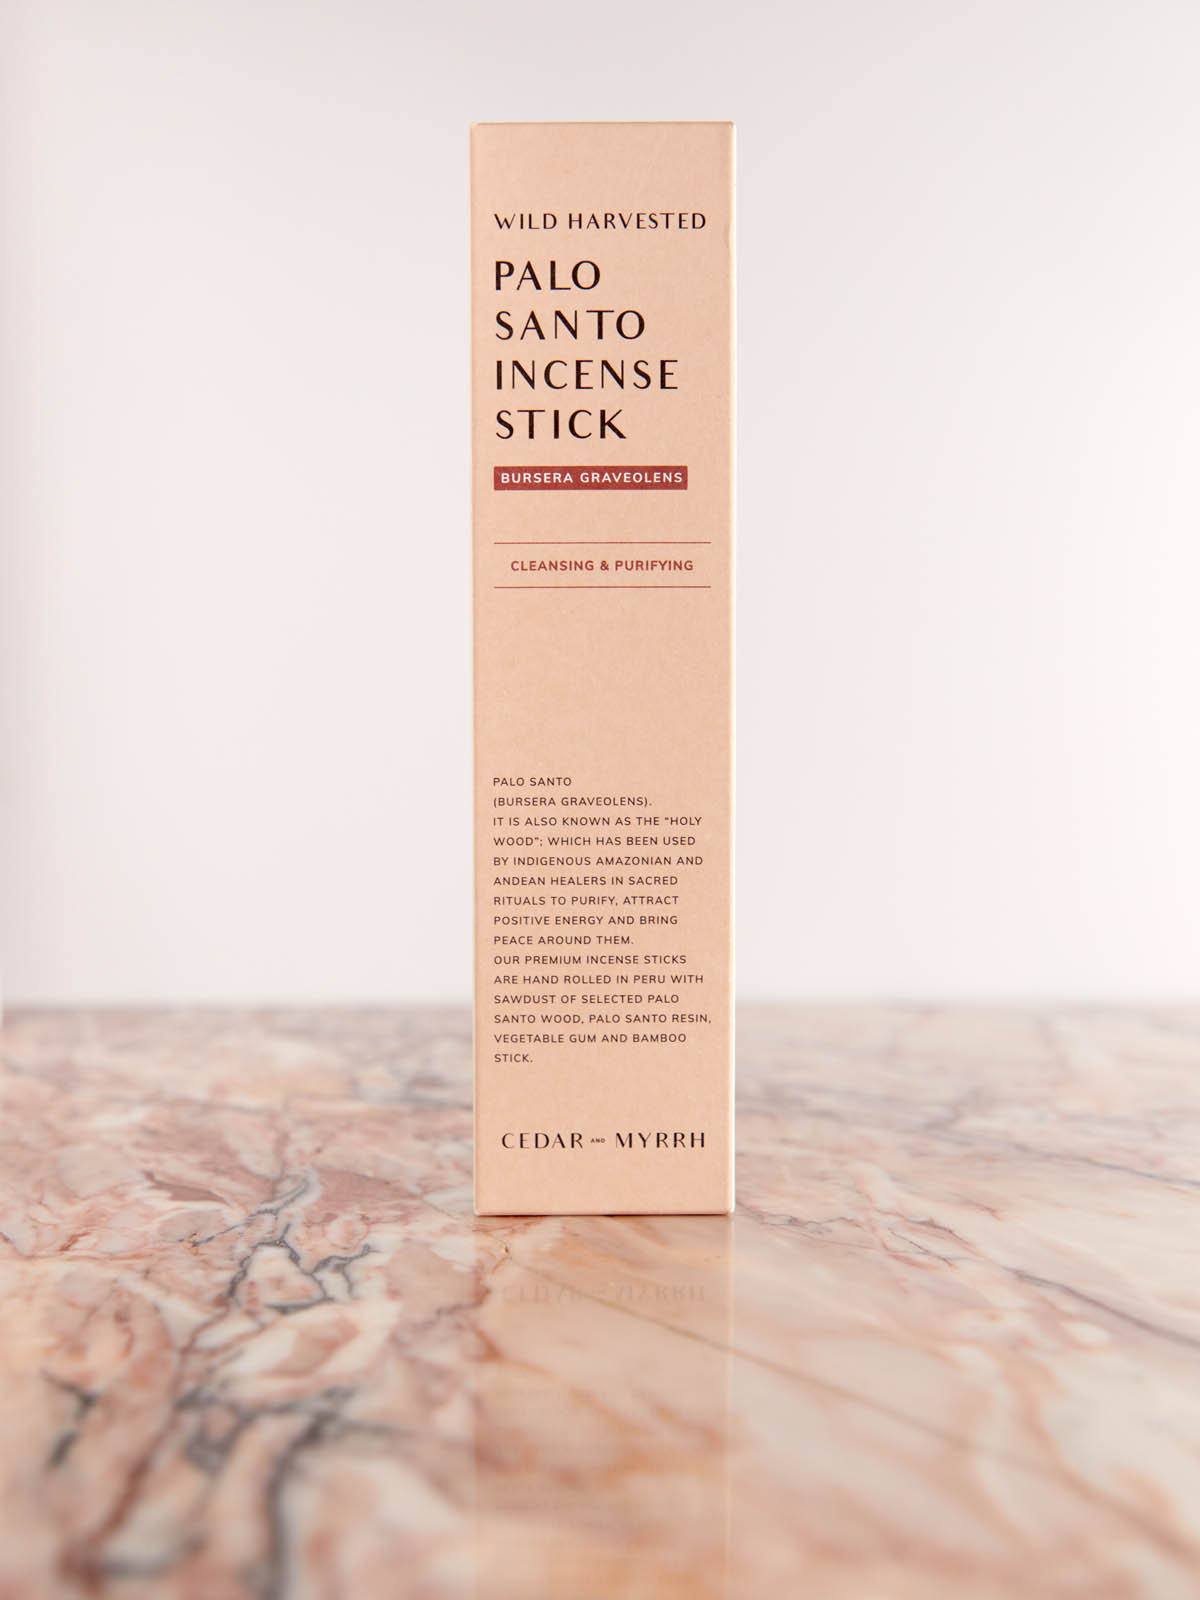 Hand Rolled Palo Santo Incense Sticks by Cedar & Myrrh box on pink marble